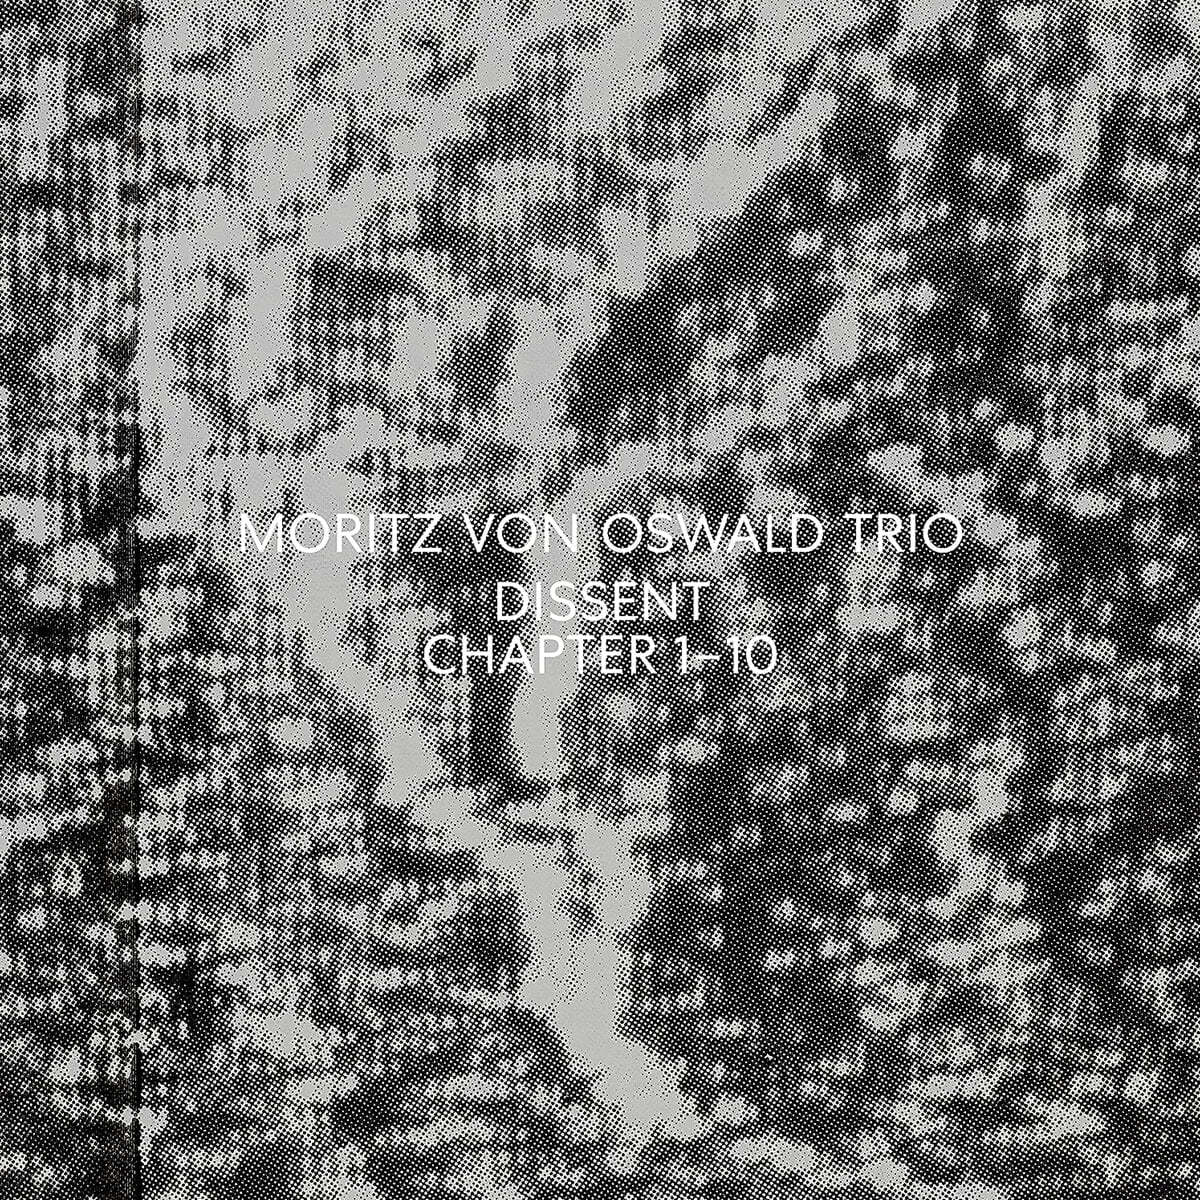 Moritz Von Oswald Trio (모리츠 폰 오스왈드 트리오) - Dissent (Chapter 1-10) [LP]